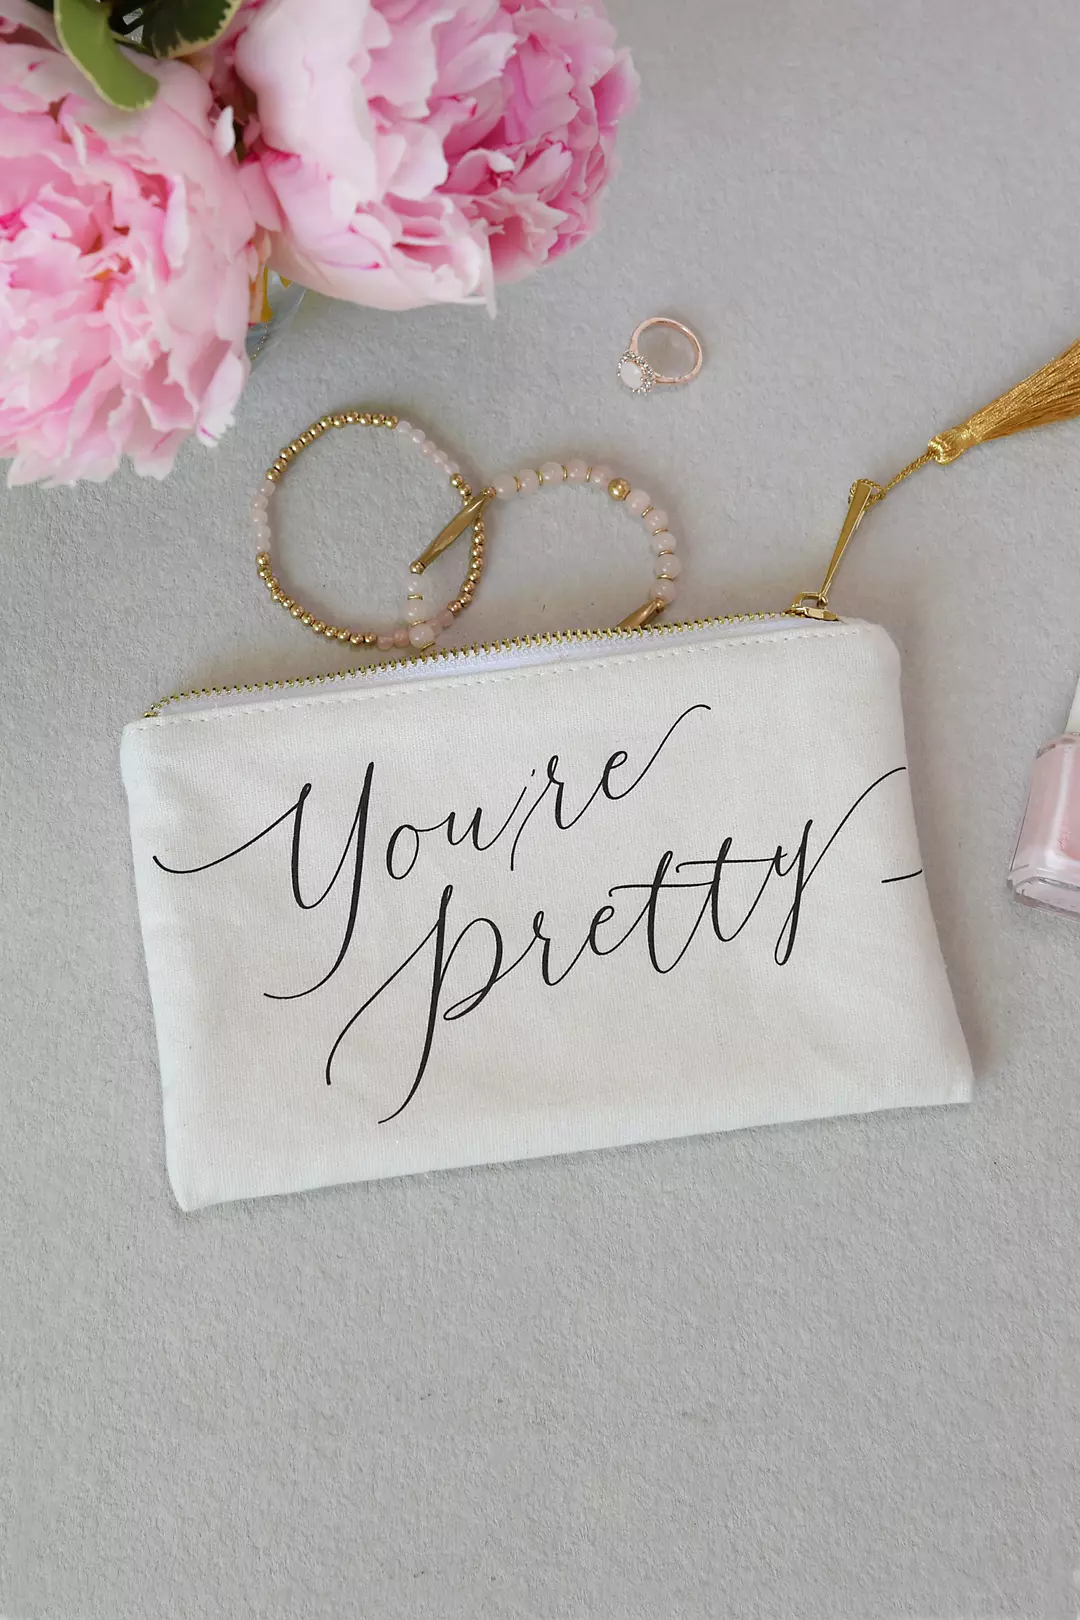 You Are Pretty Makeup Bag Image